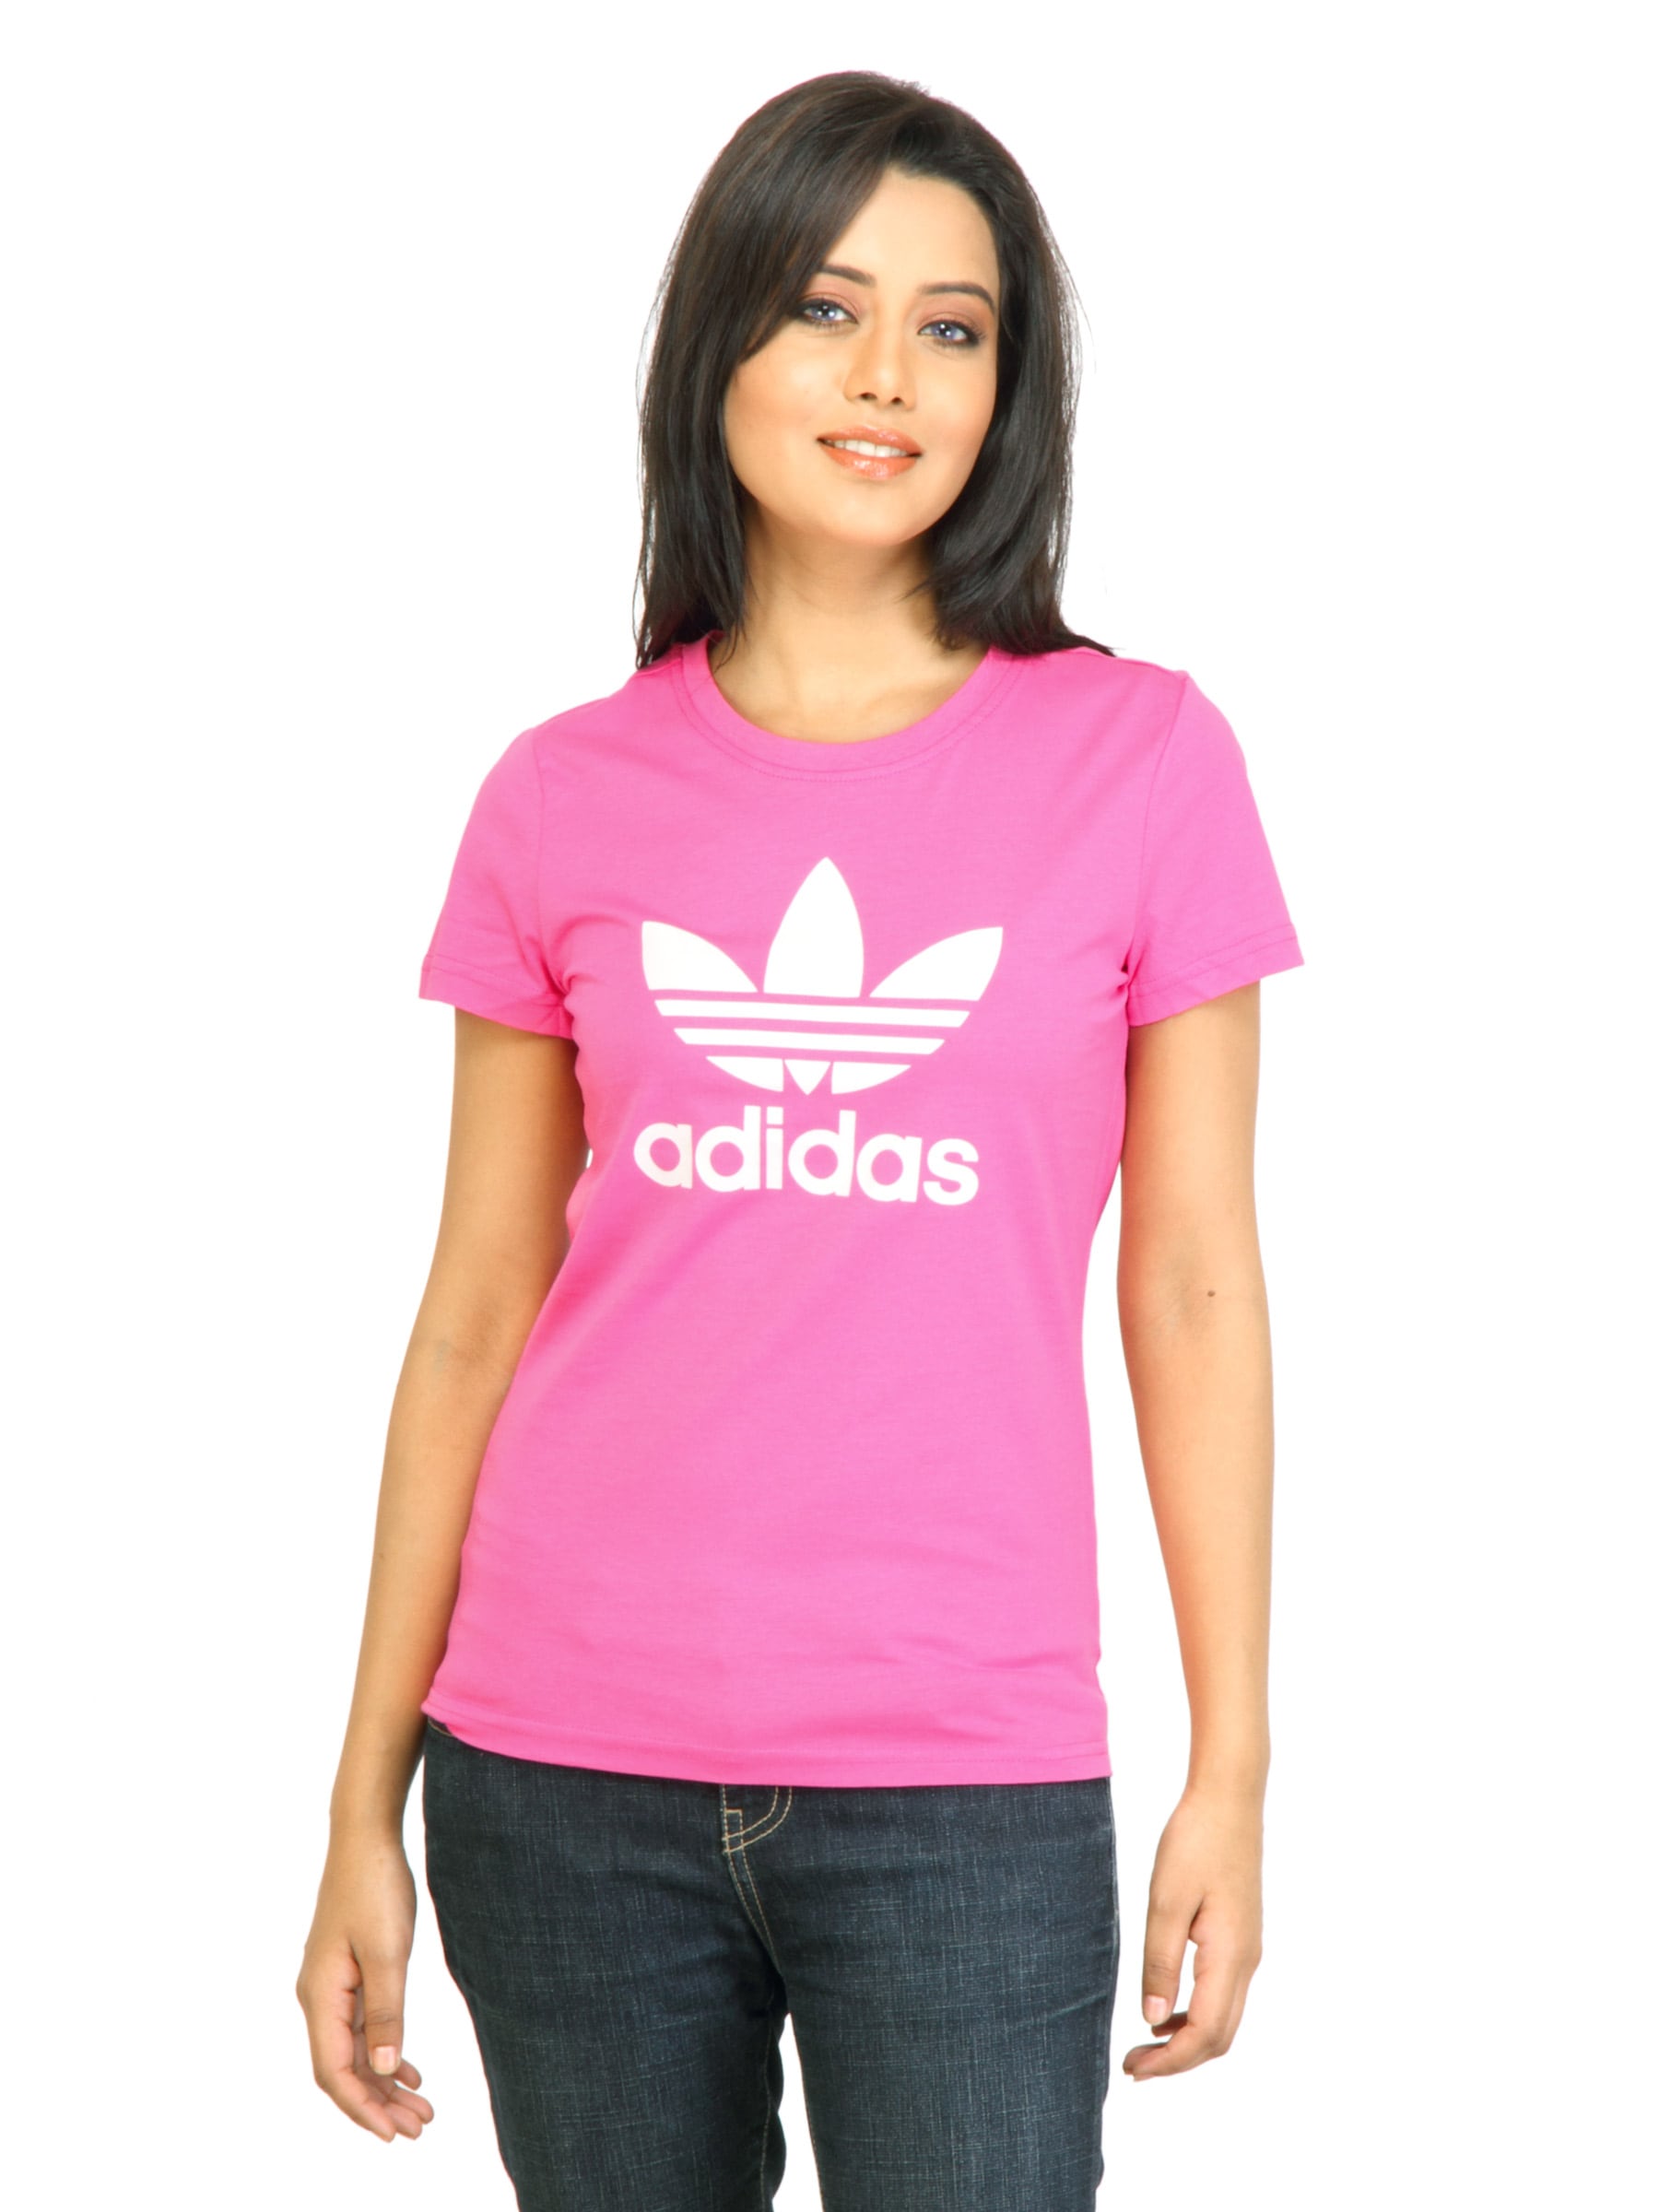 ADIDAS Originals Women Trefoil Pink Tshirt